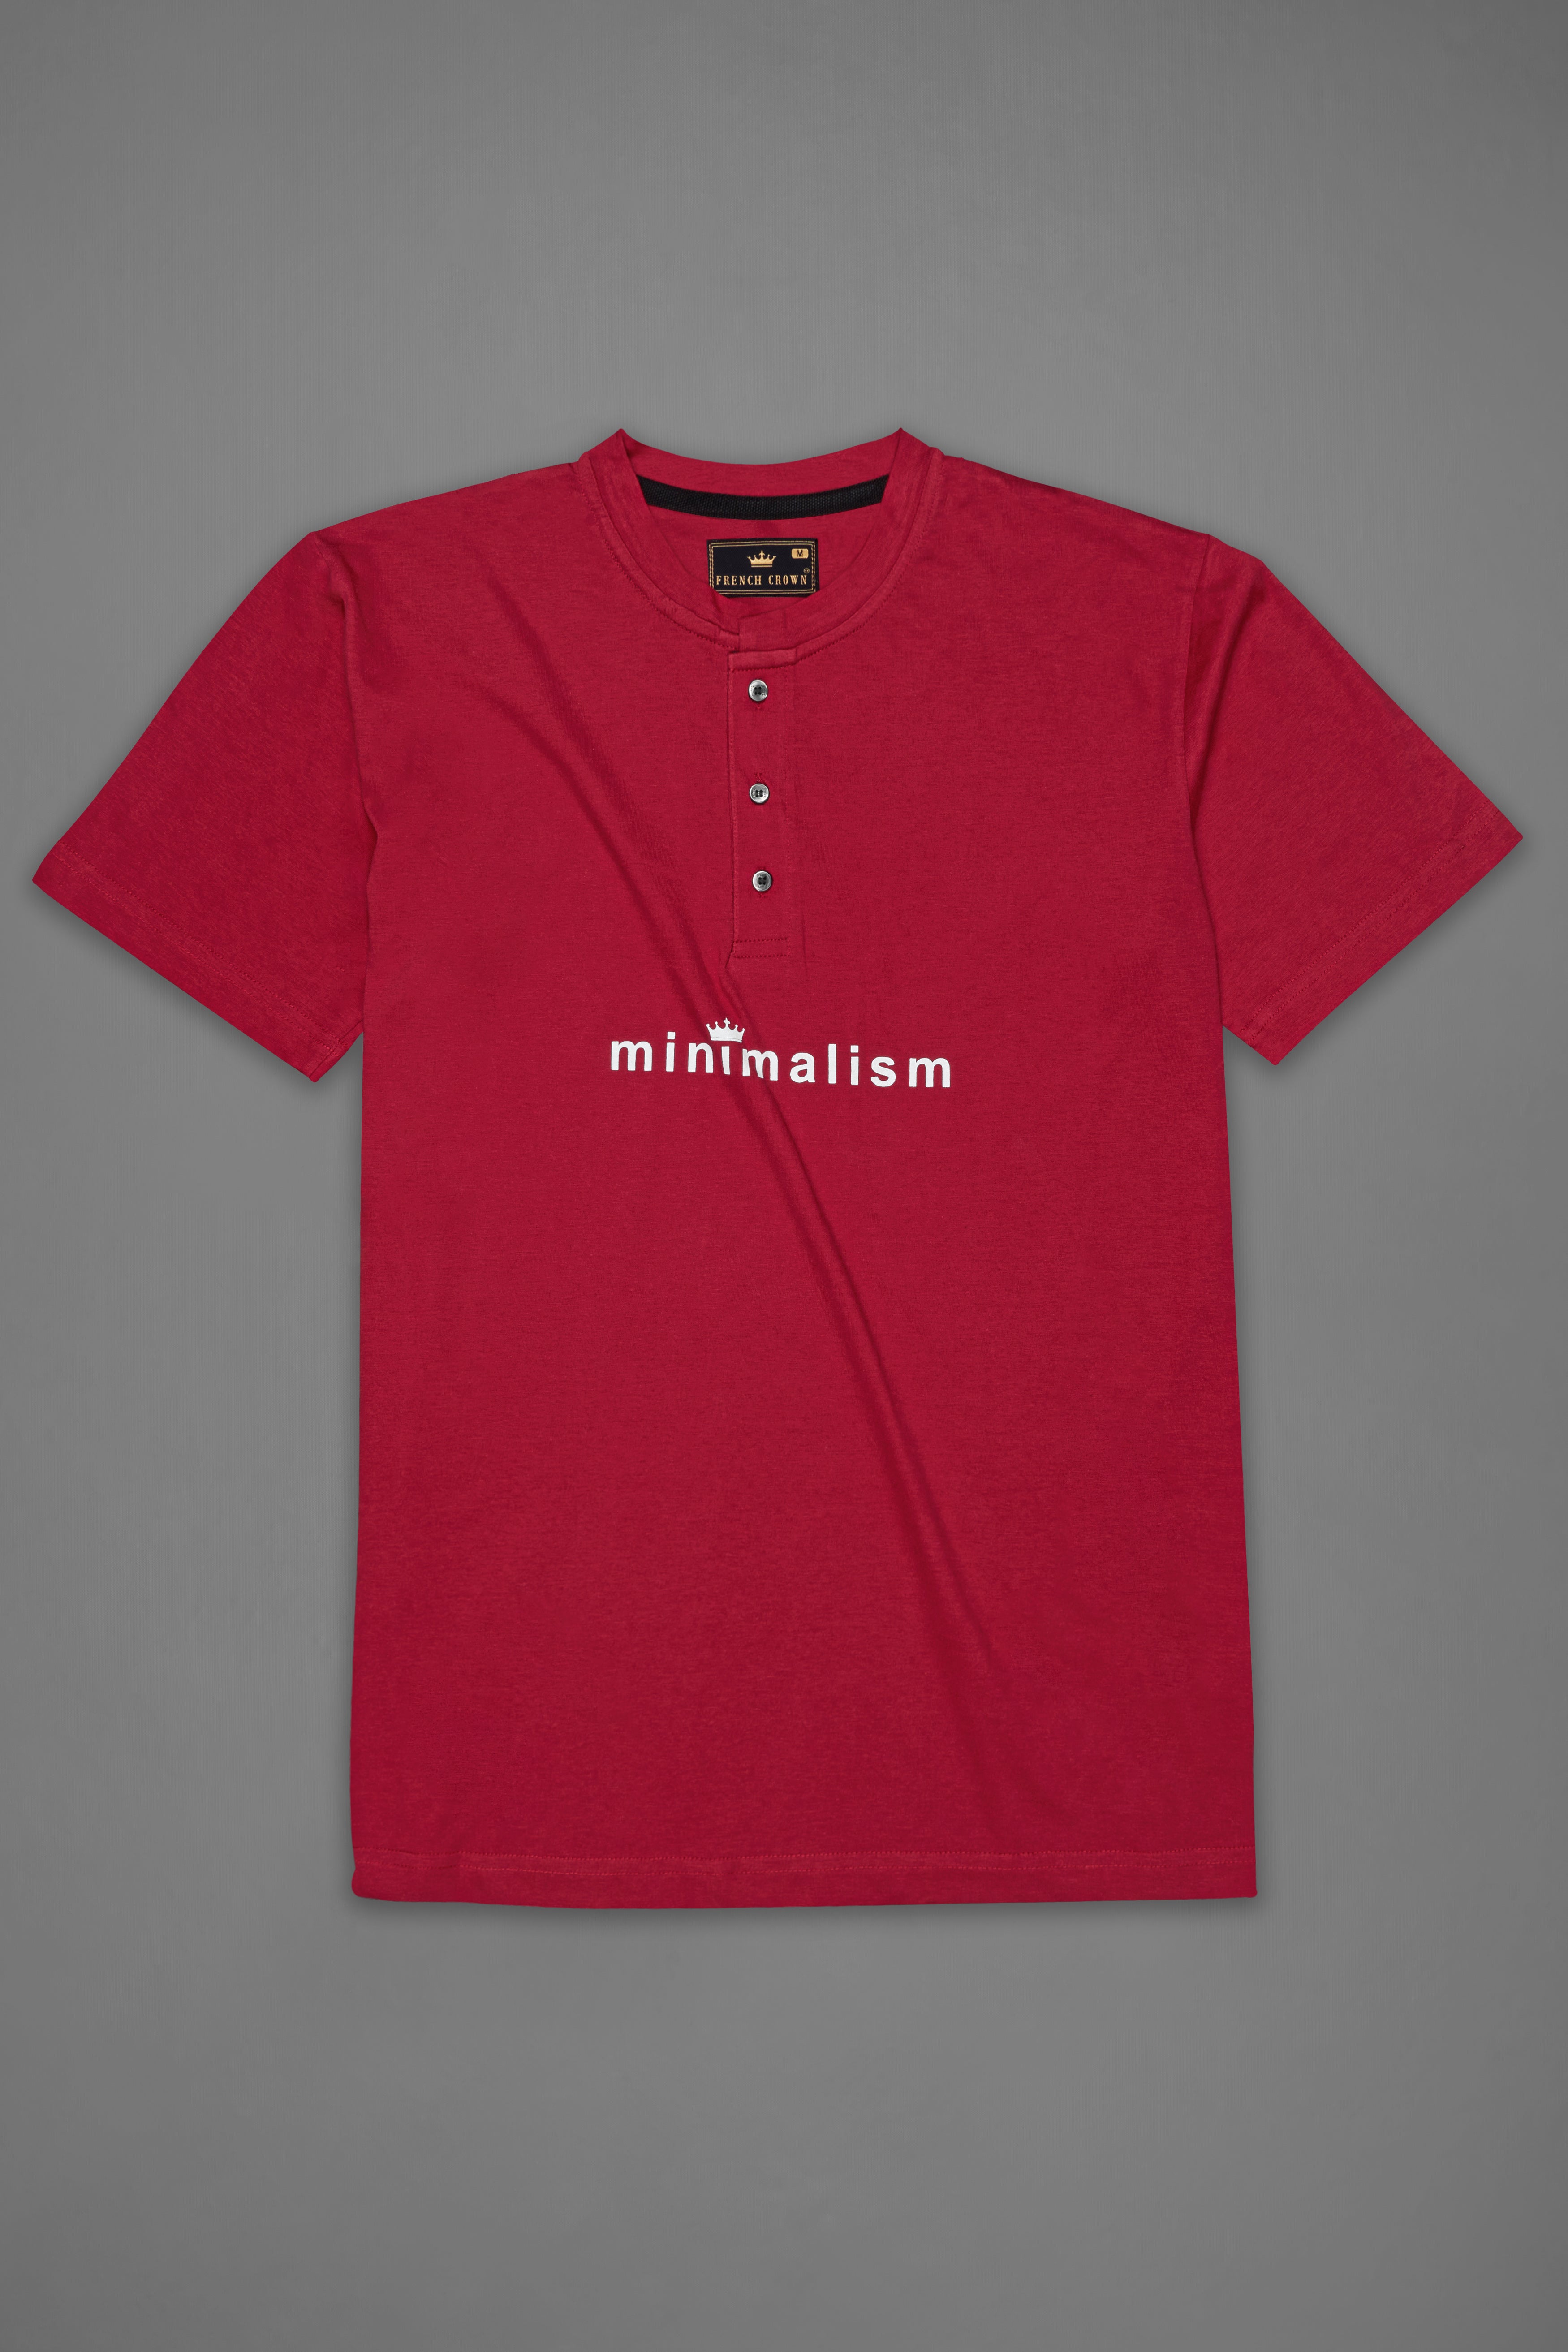 Monarch Red Premium Cotton Round Neck T-Shirt TS918-S, TS918-M, TS918-L, TS918-XL, TS918-XXL